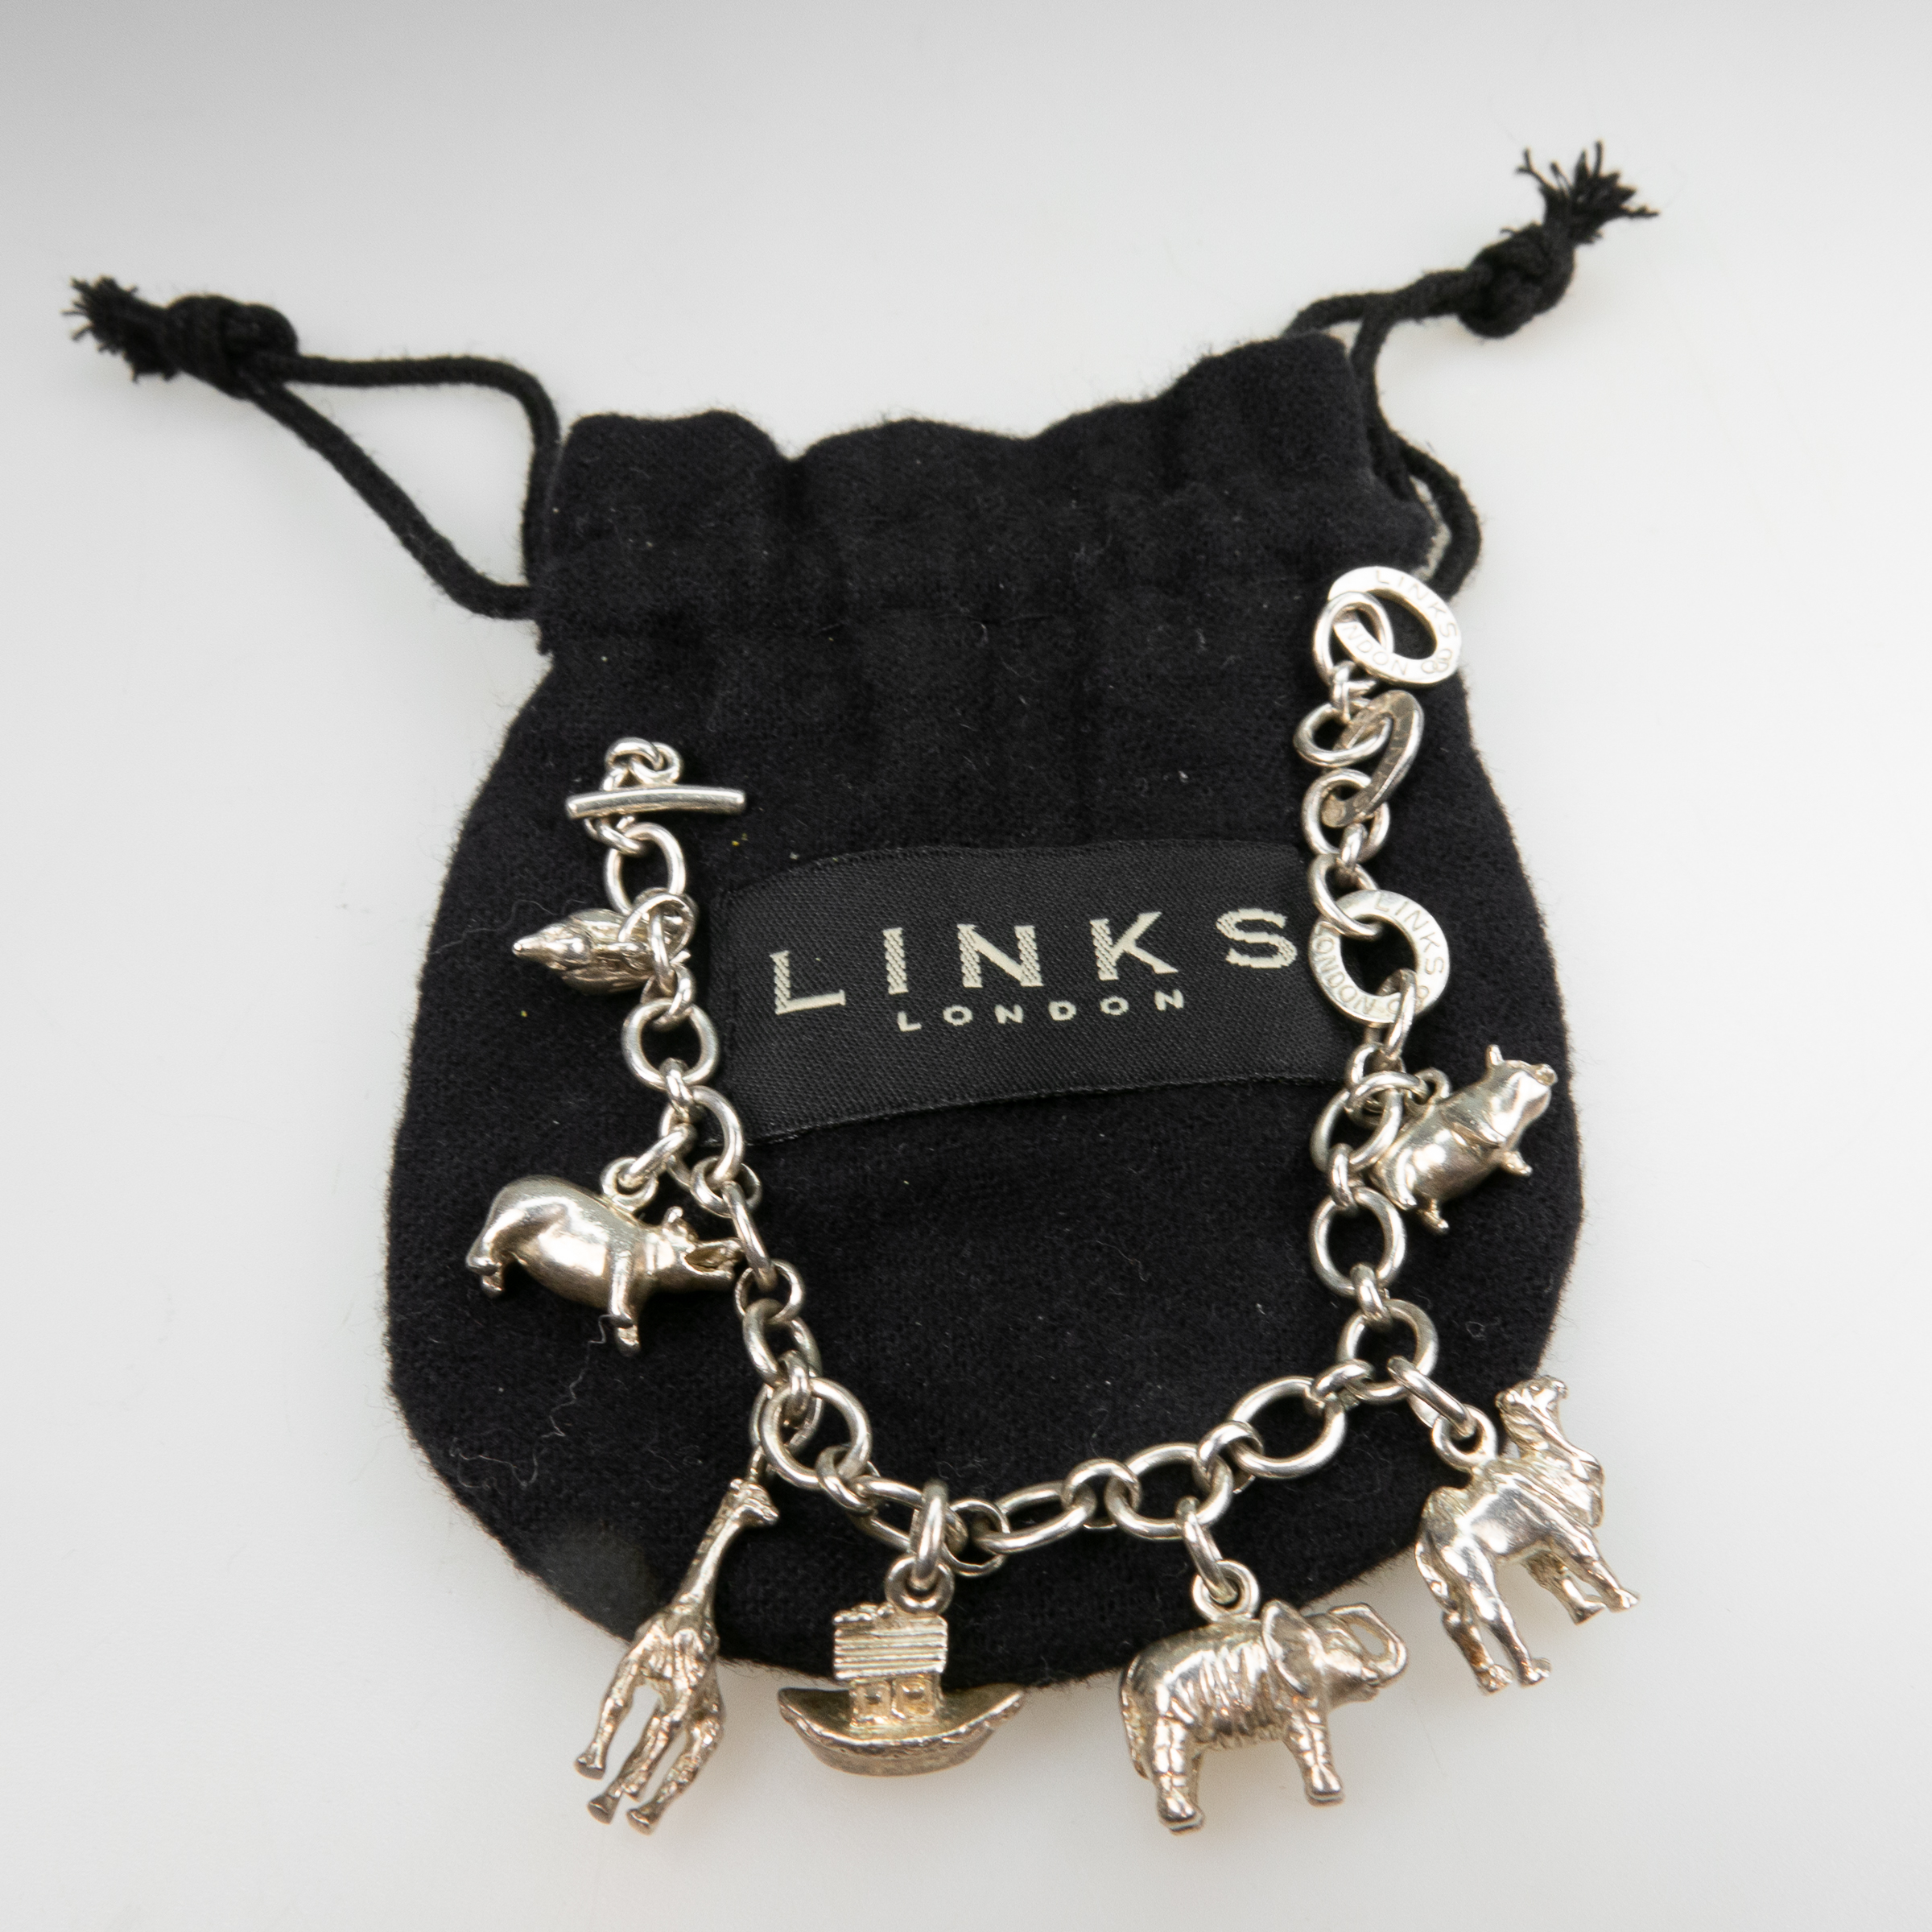 Links of London Sterling Silver Charm Bracelet